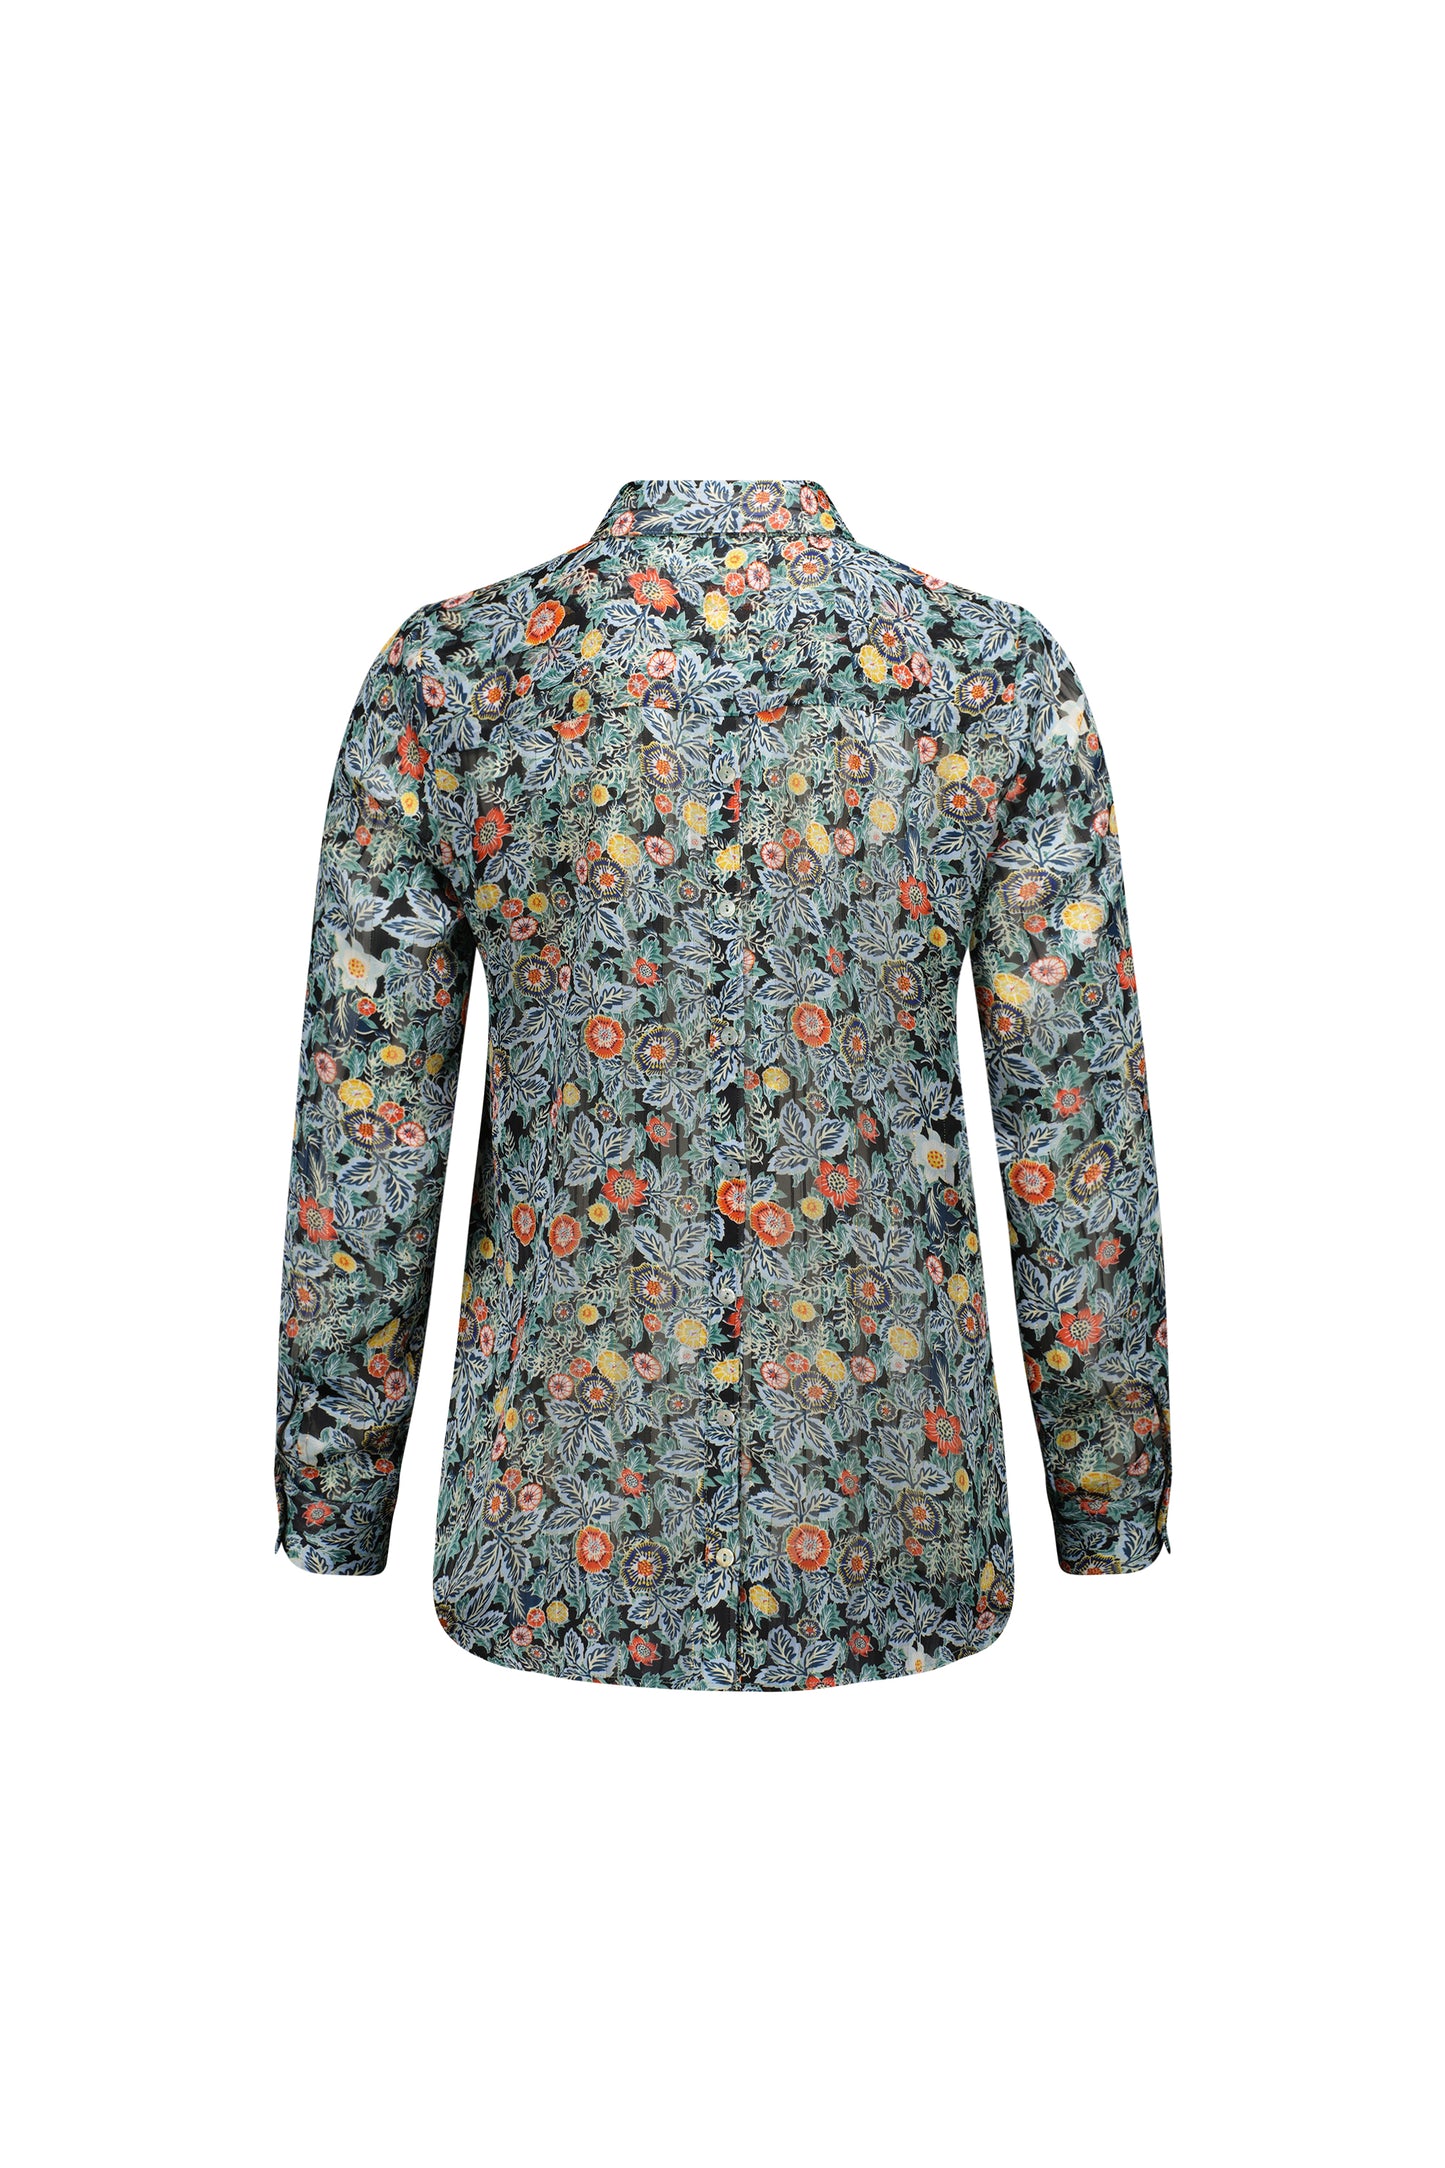 Vassalli - 4308 Long Sleeve Shirt with Back Button Placket - Ellery - INSTORE